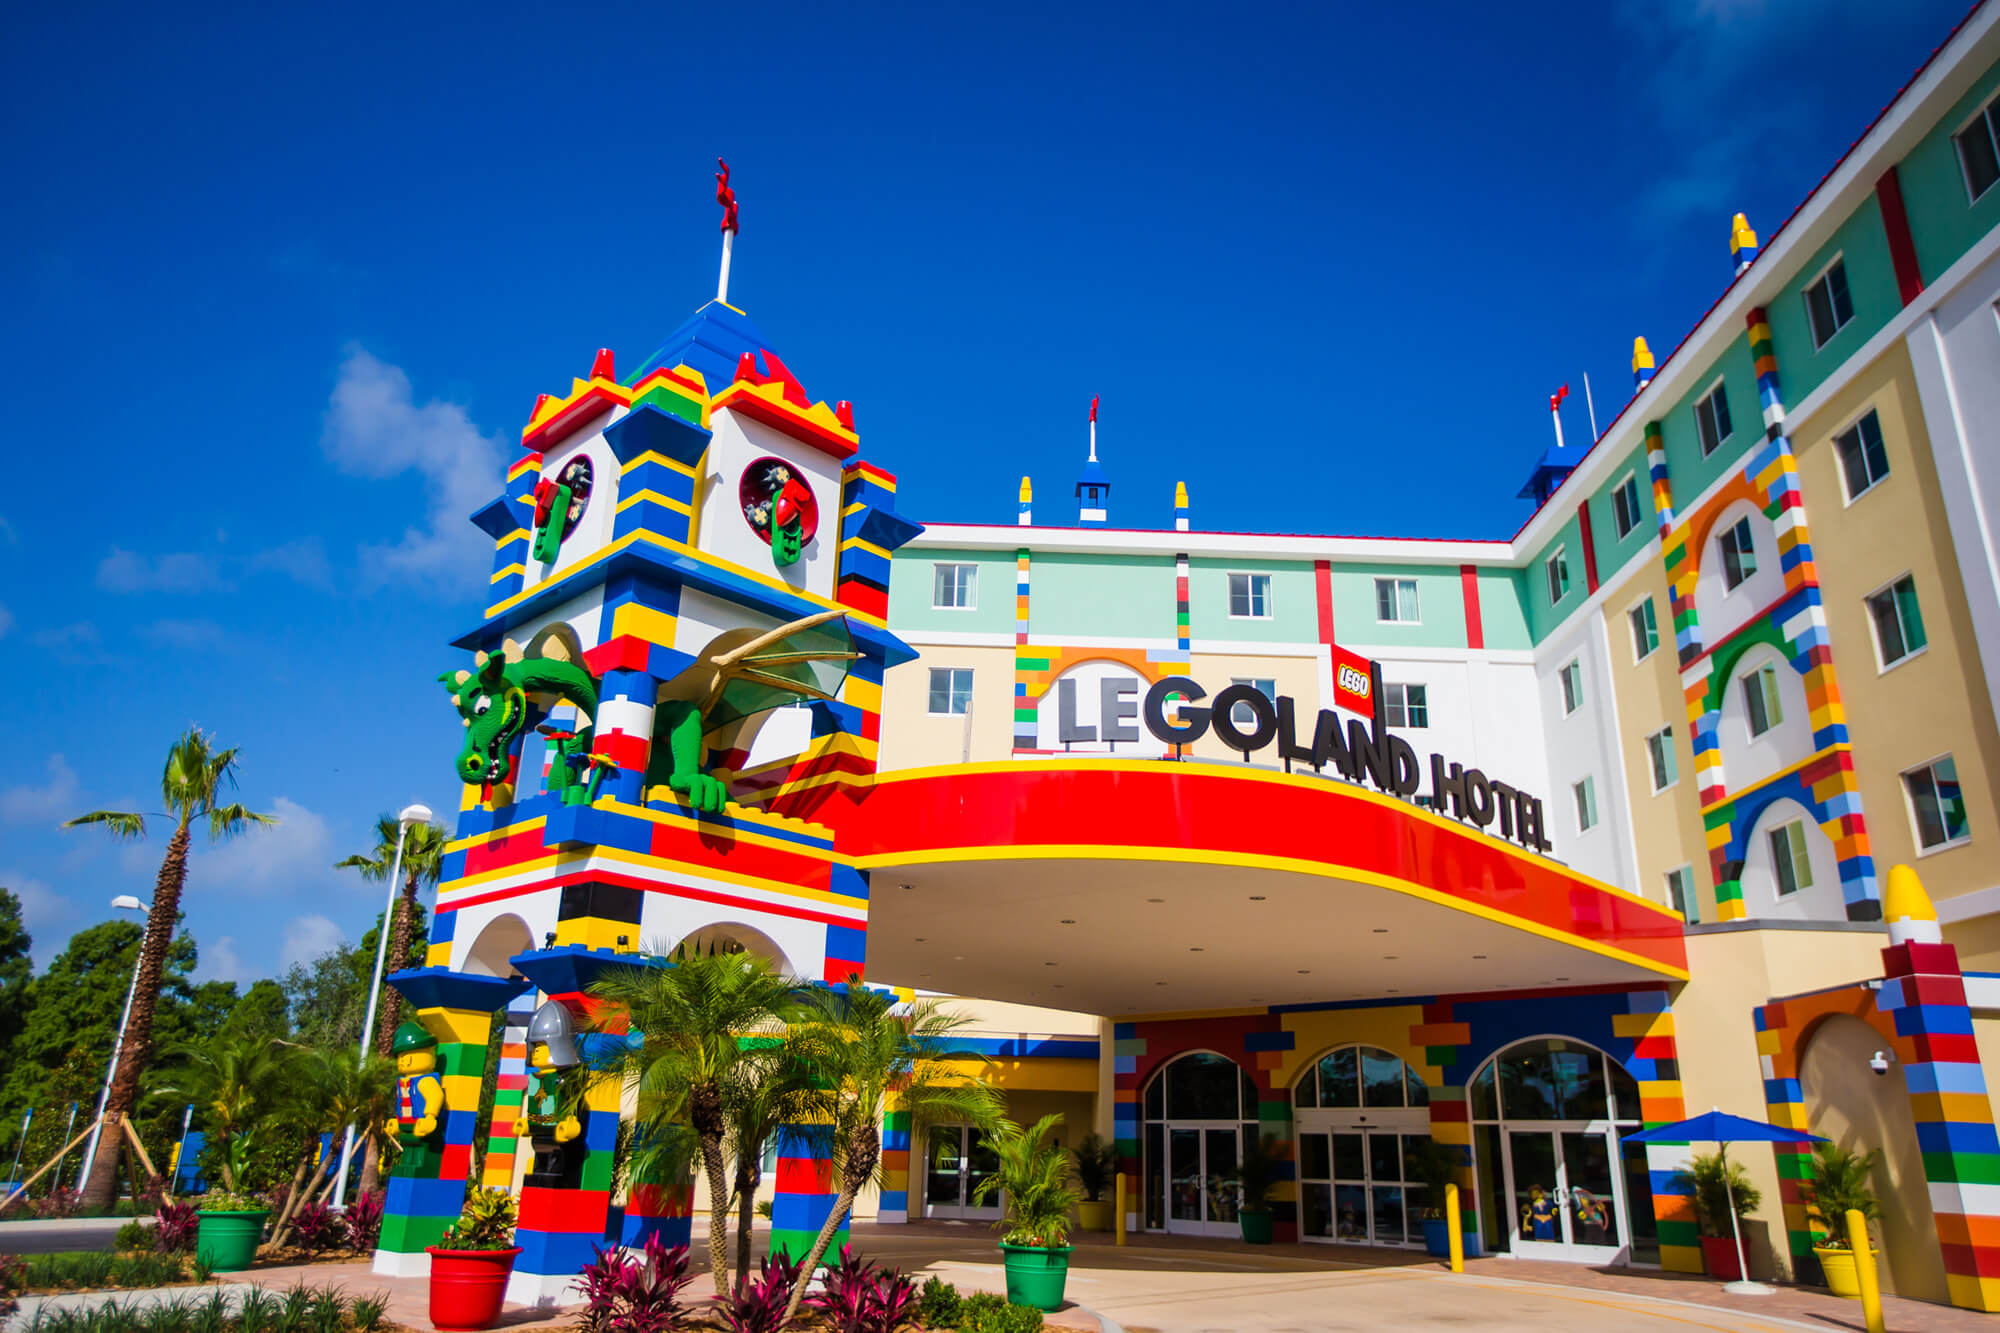 Exterior and entrance of LEGOLAND Hotel at LEGOLAND Florida Resort in Winter Haven, FL